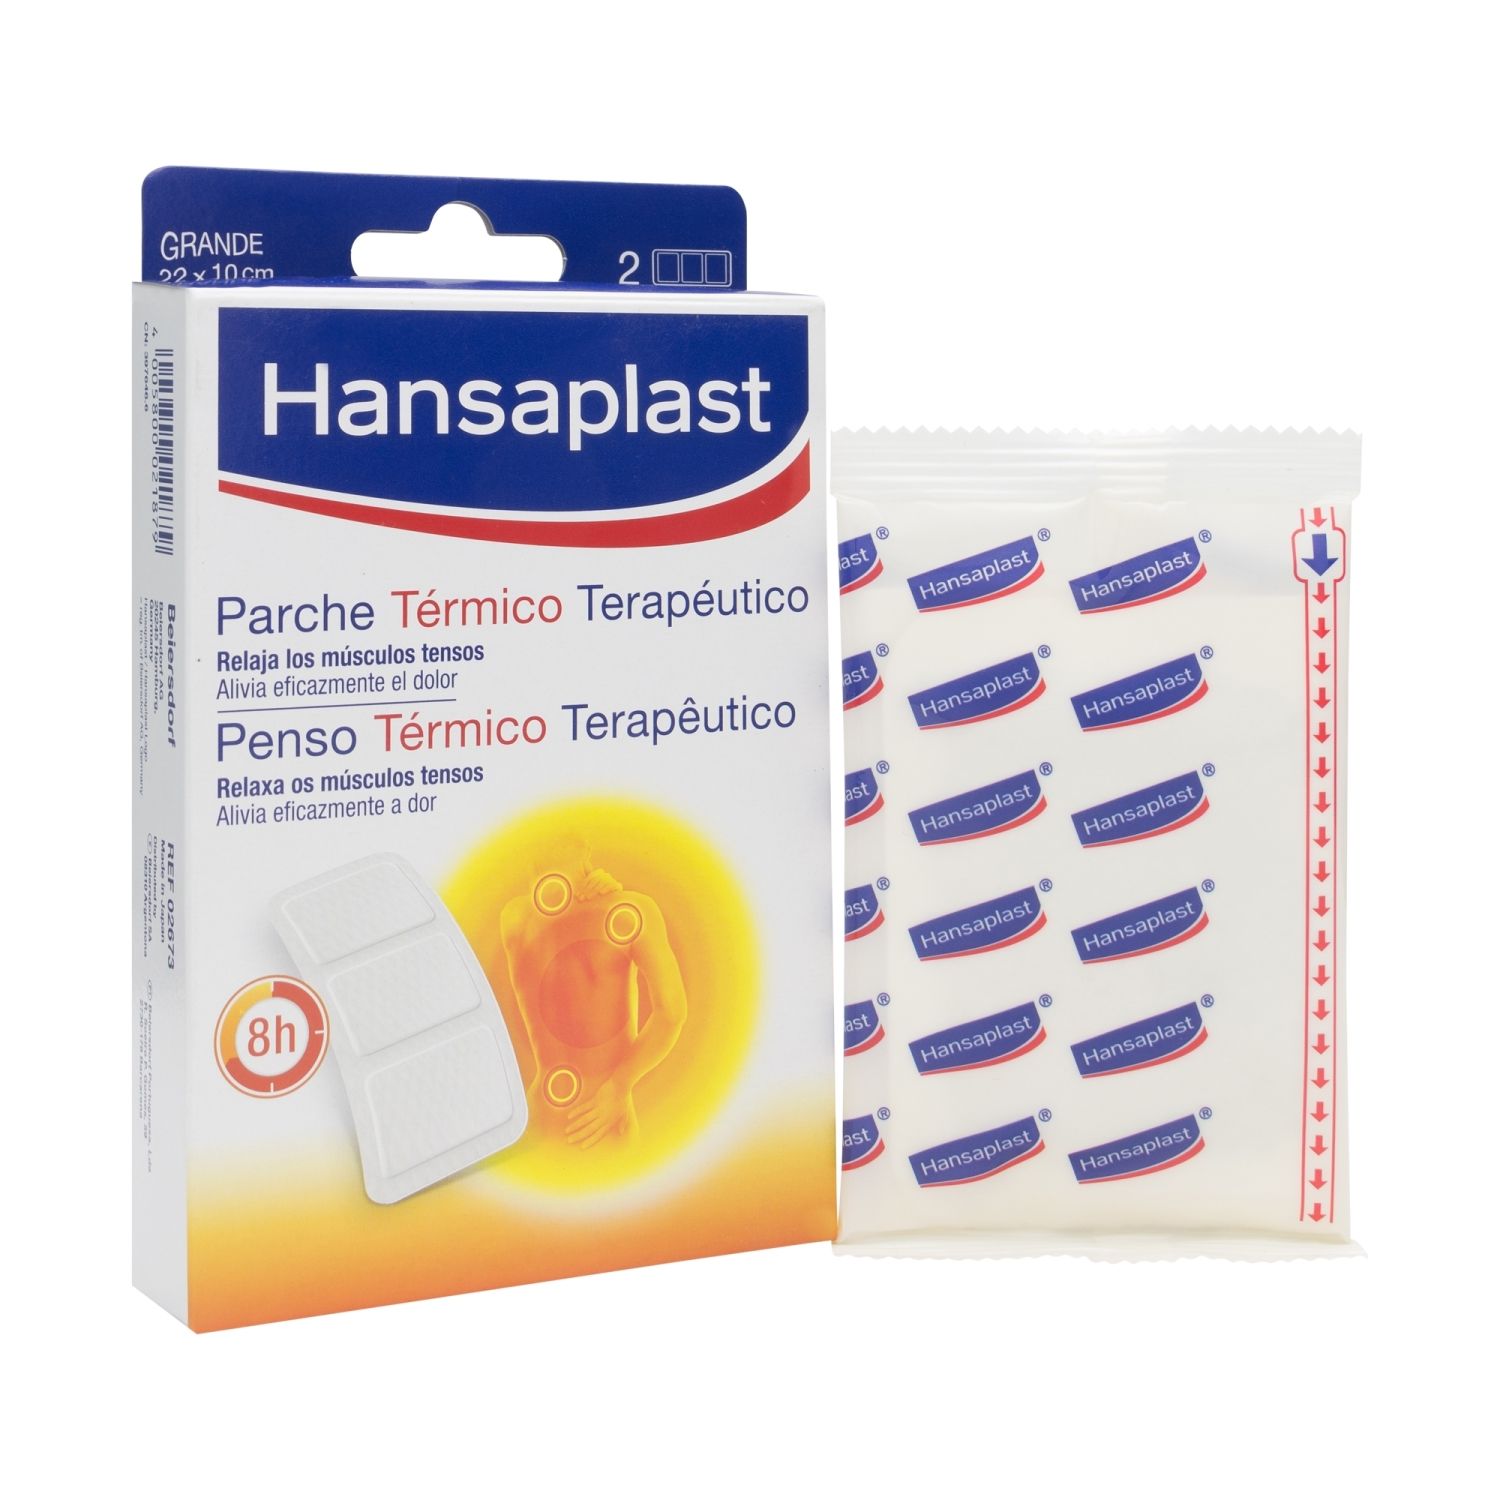 Hansaplast - image 0